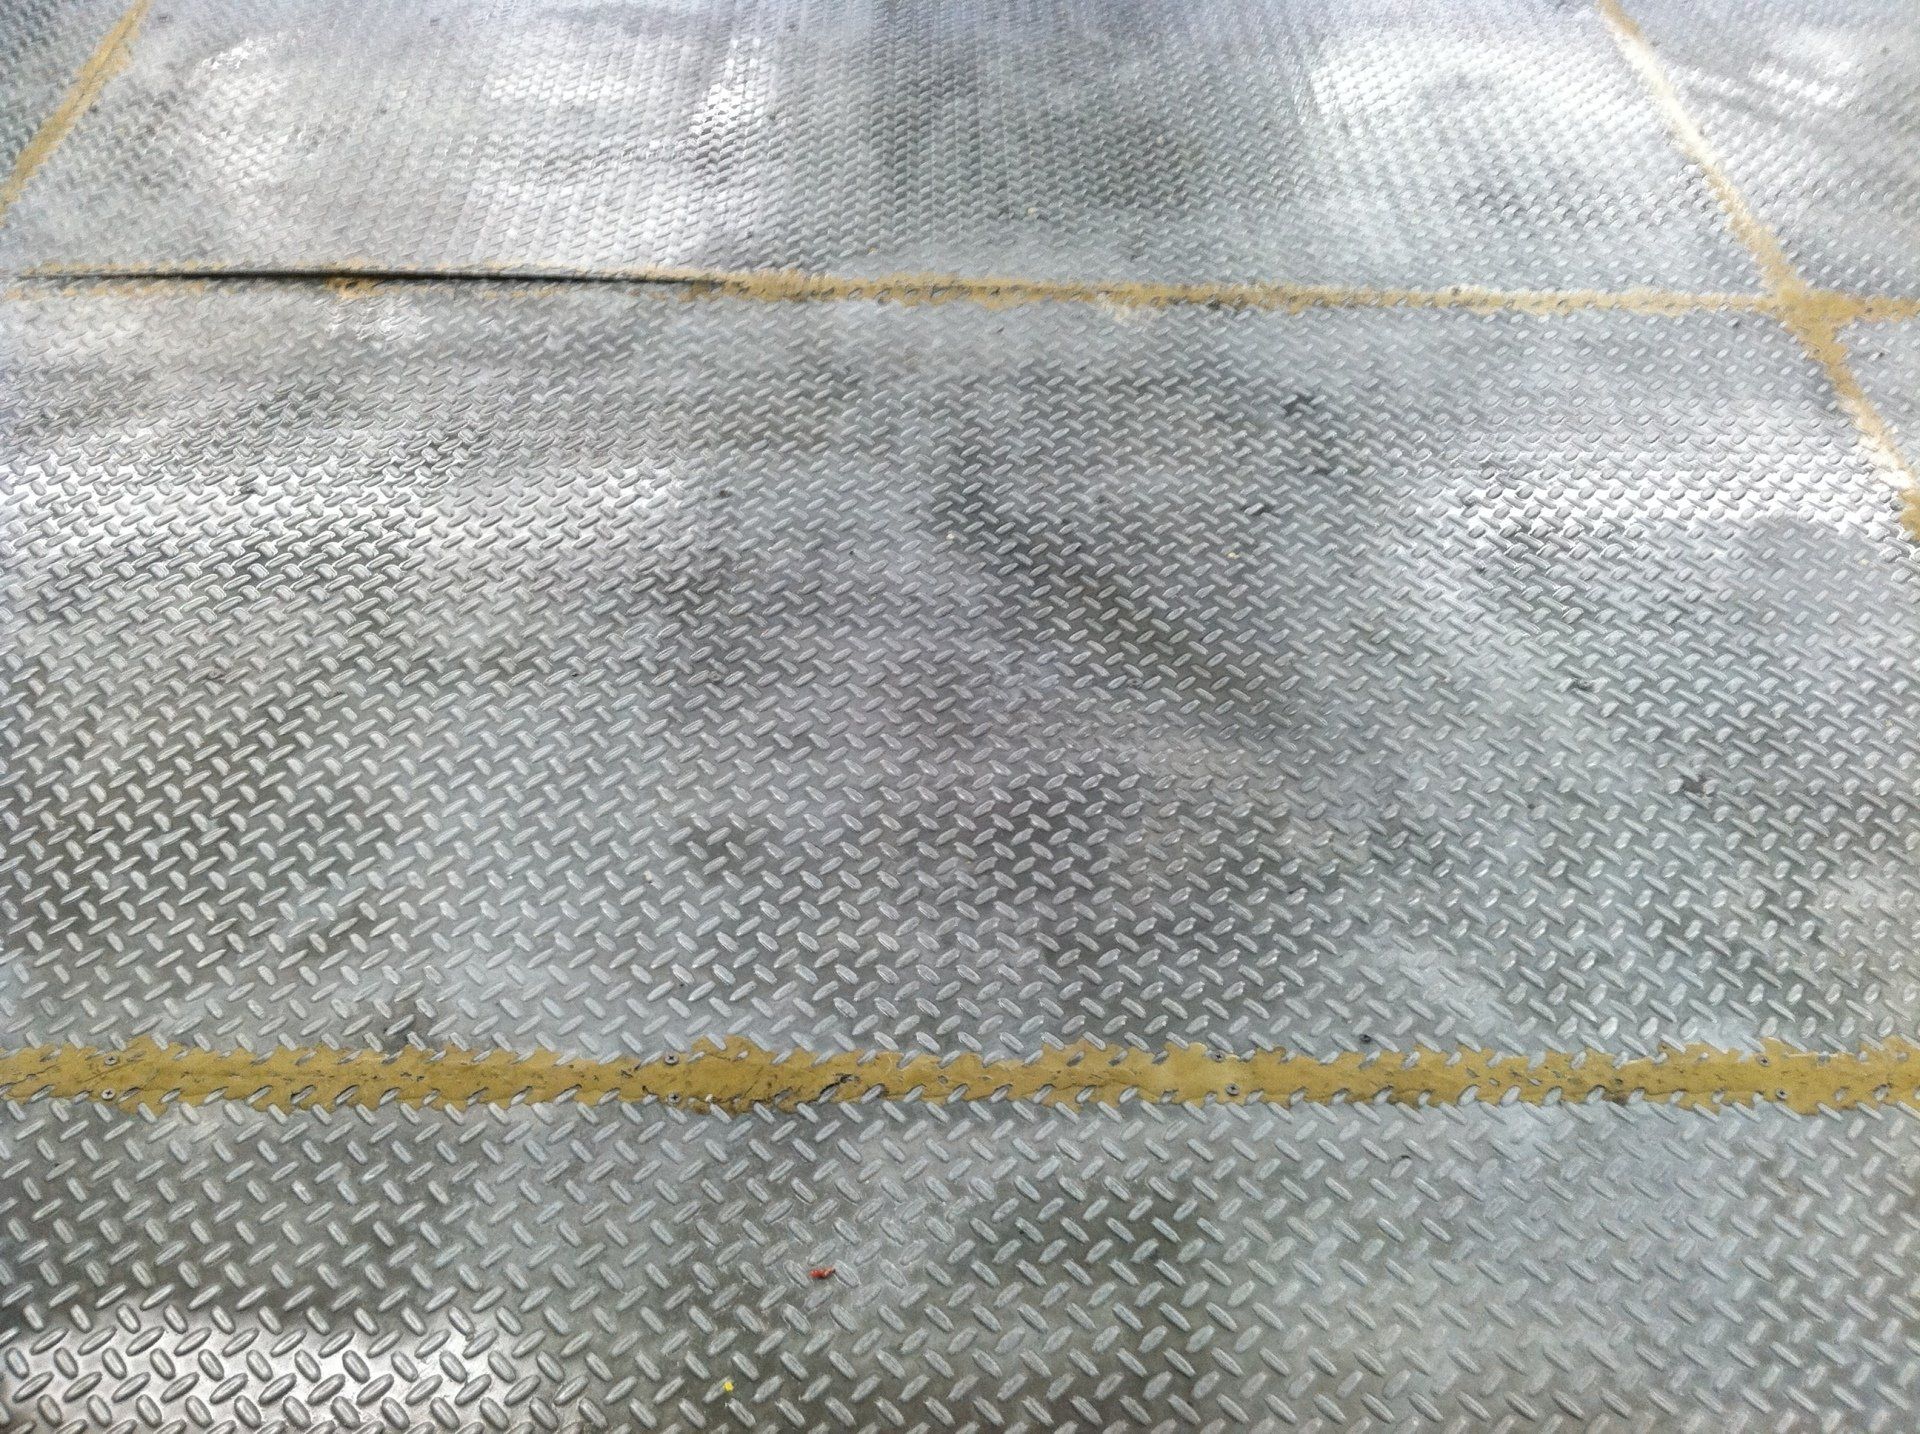 Clean steel floor after the restoration